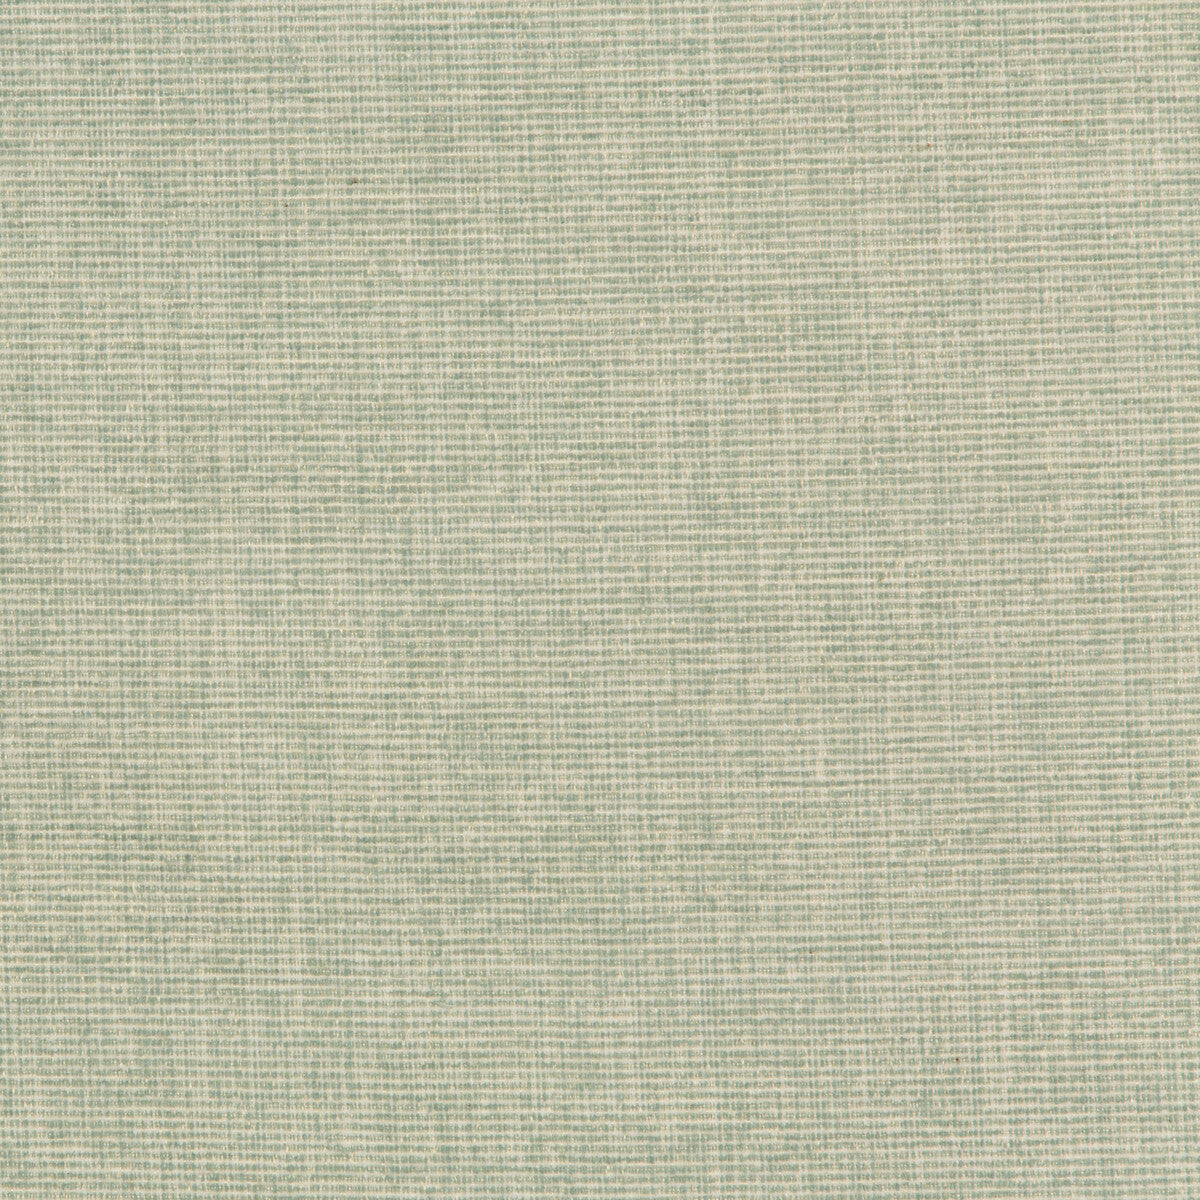 Kravet Smart fabric in 35949-13 color - pattern 35949.13.0 - by Kravet Smart in the Performance Kravetarmor collection